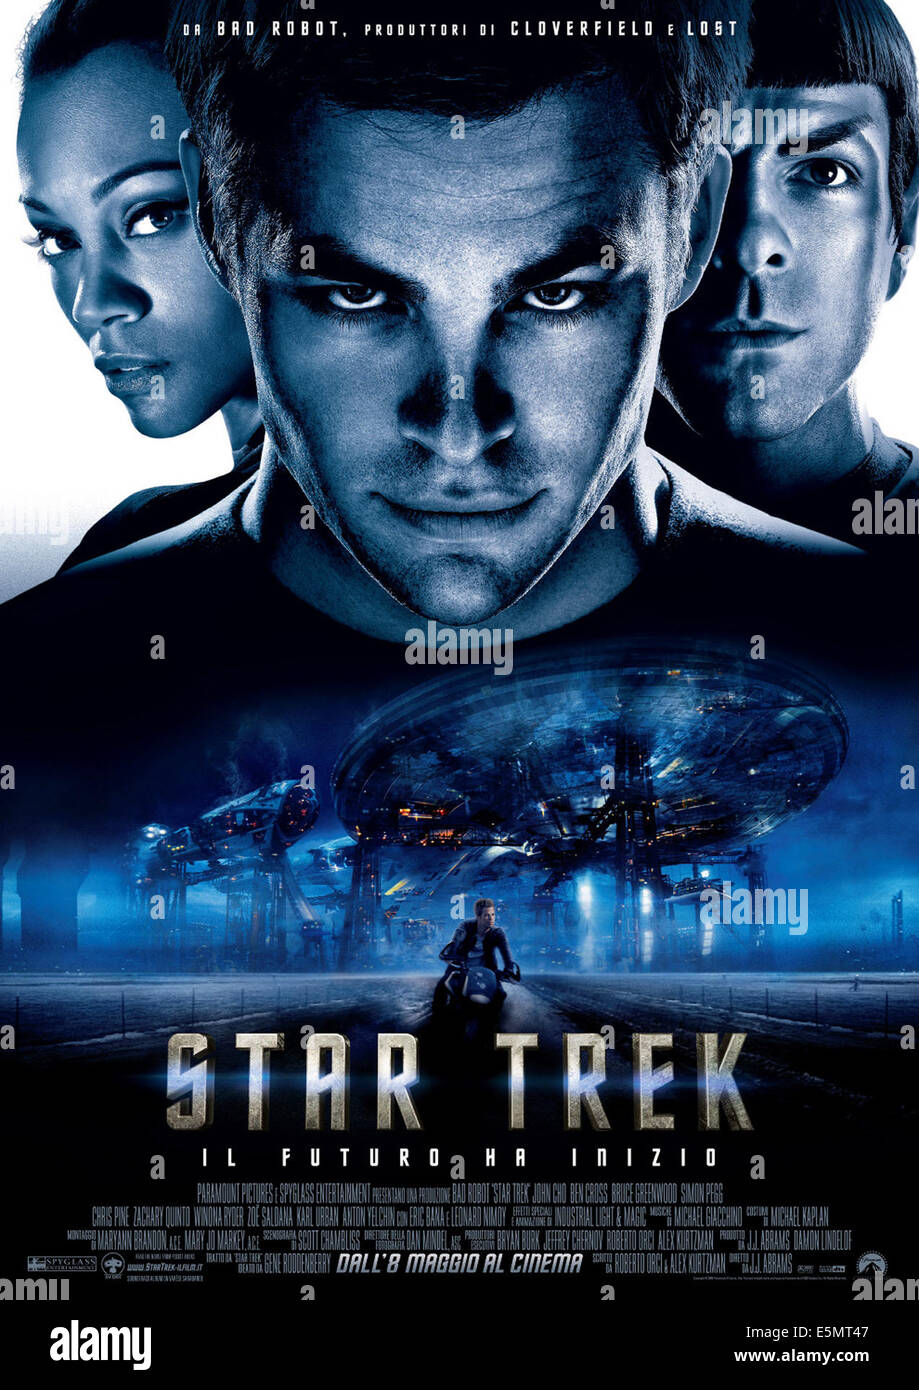 STAR TREK, Italian poster art, top, from left: Zoe Saldana, Chris Pine as James T. Kirk, Zachary Quinto as Spock, 2009. Stock Photo